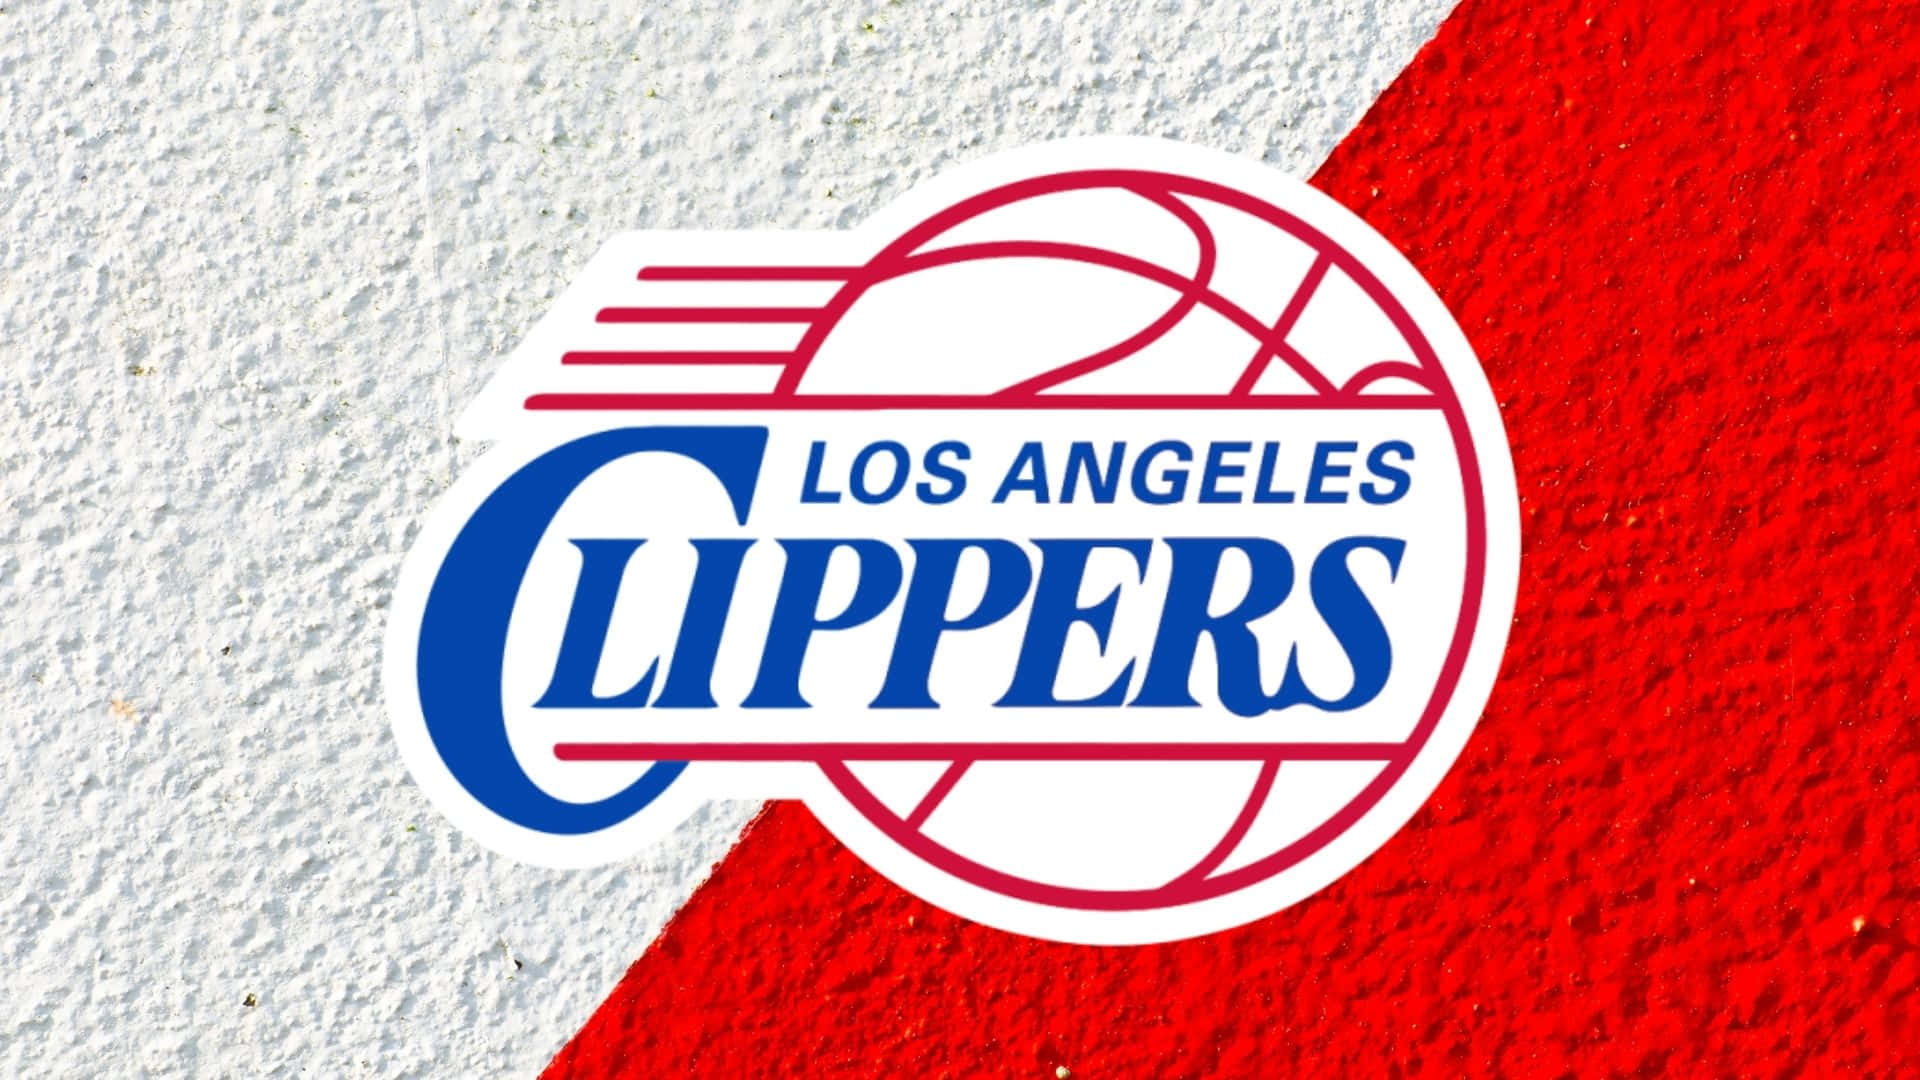 Losangeles Clippers, Stiger Upp. Wallpaper